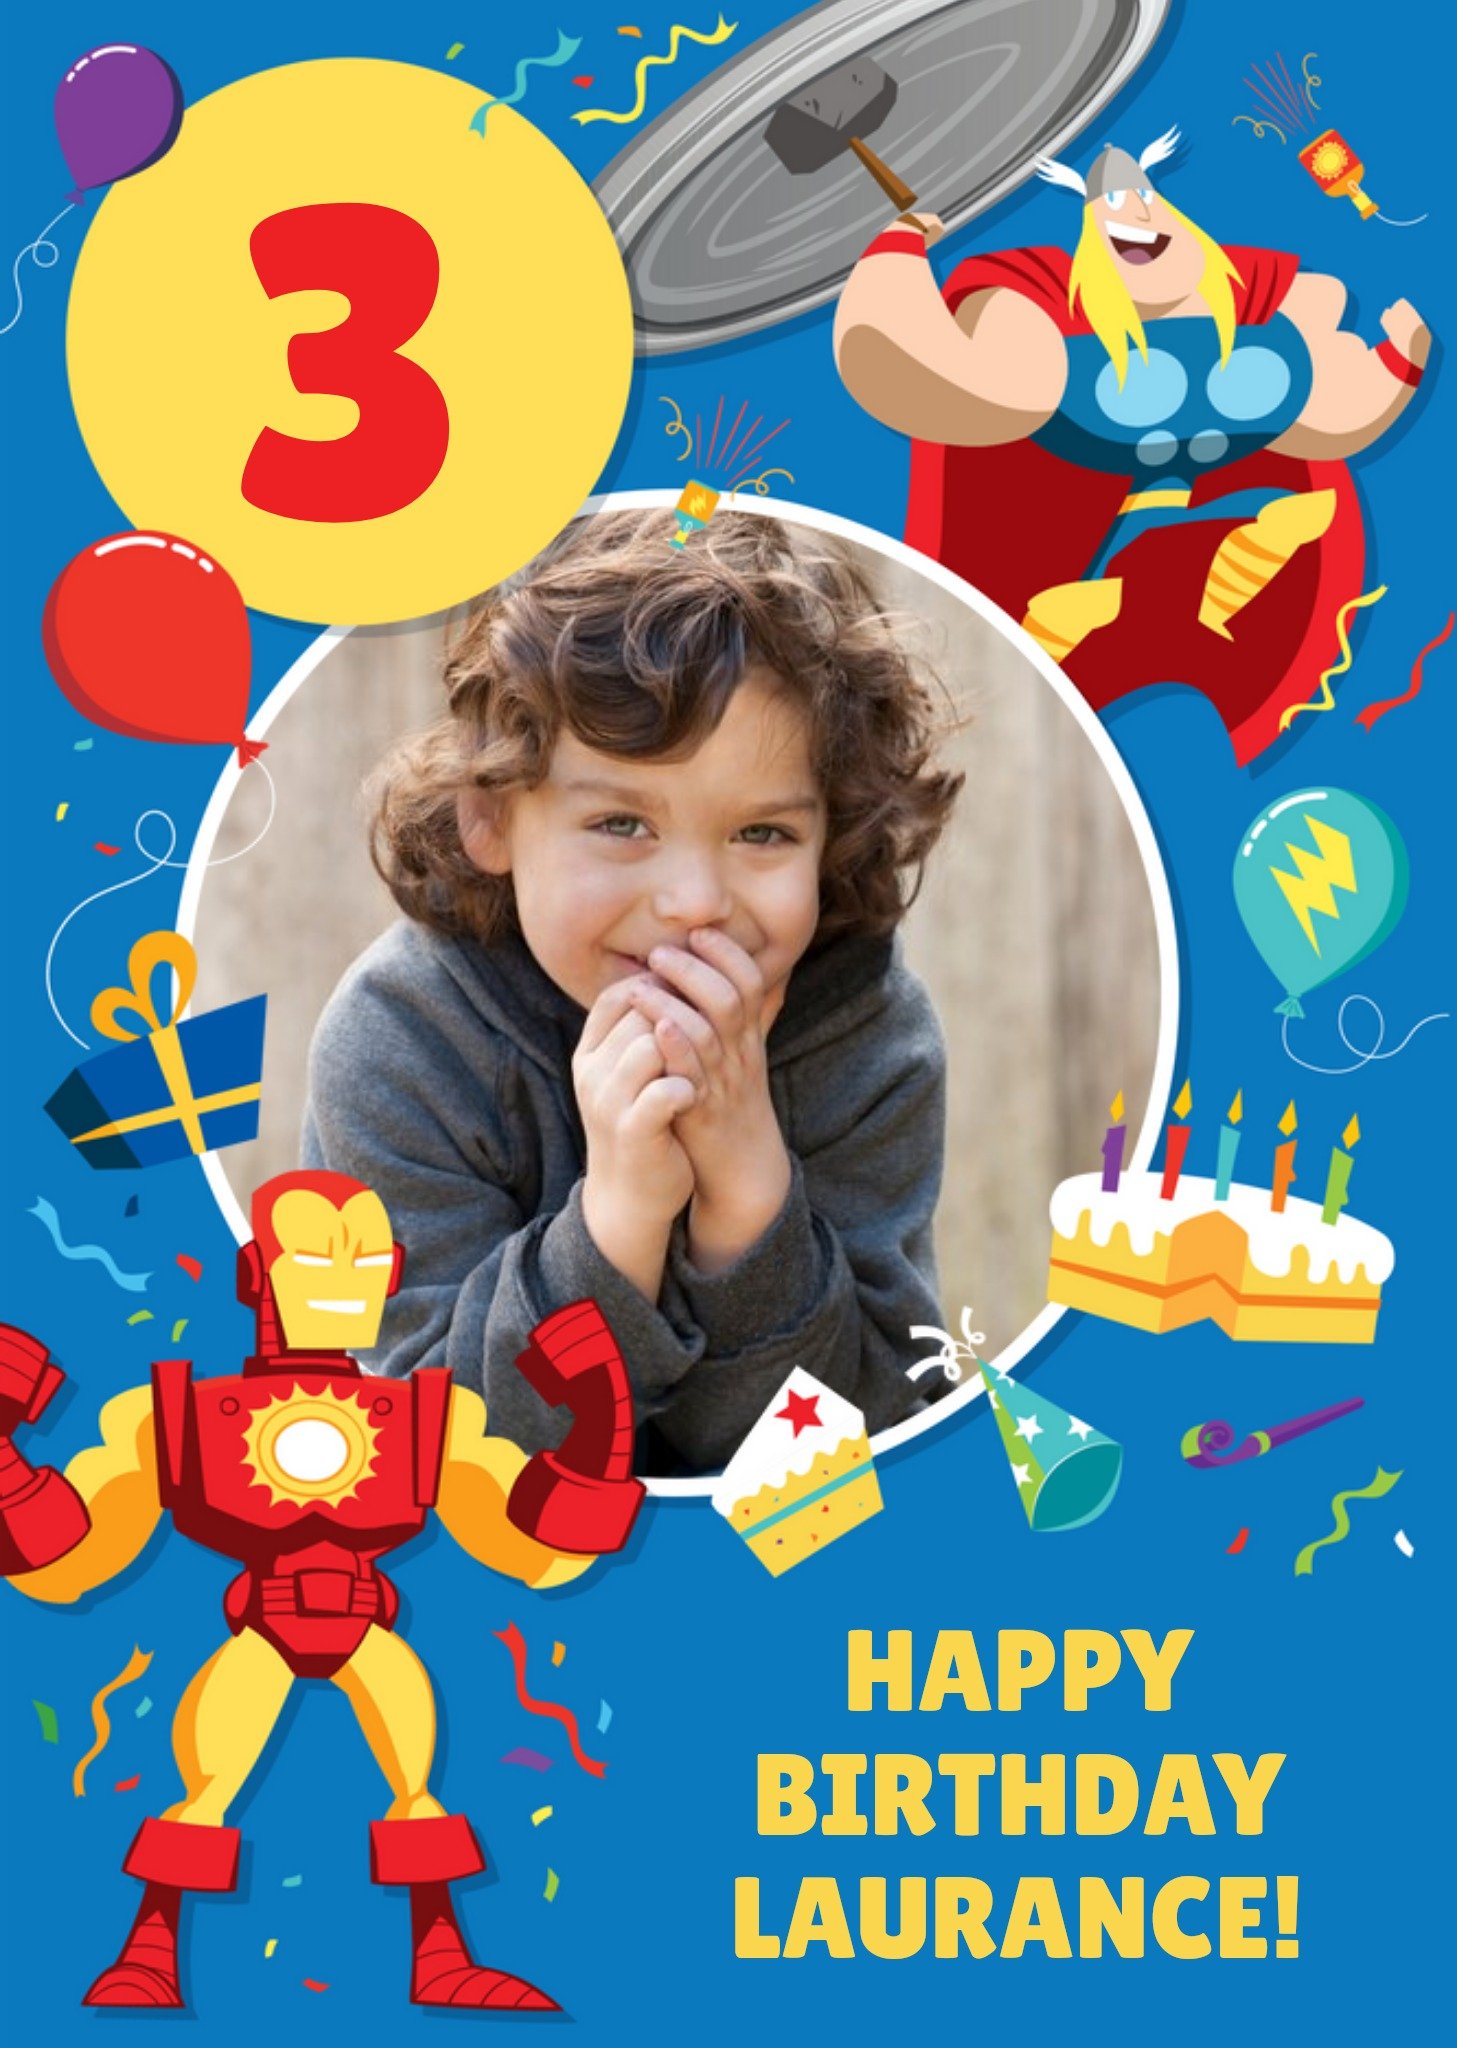 Disney Marvel Comics Happy Birthday Thor And Iron Man Photo Upload Card, Large